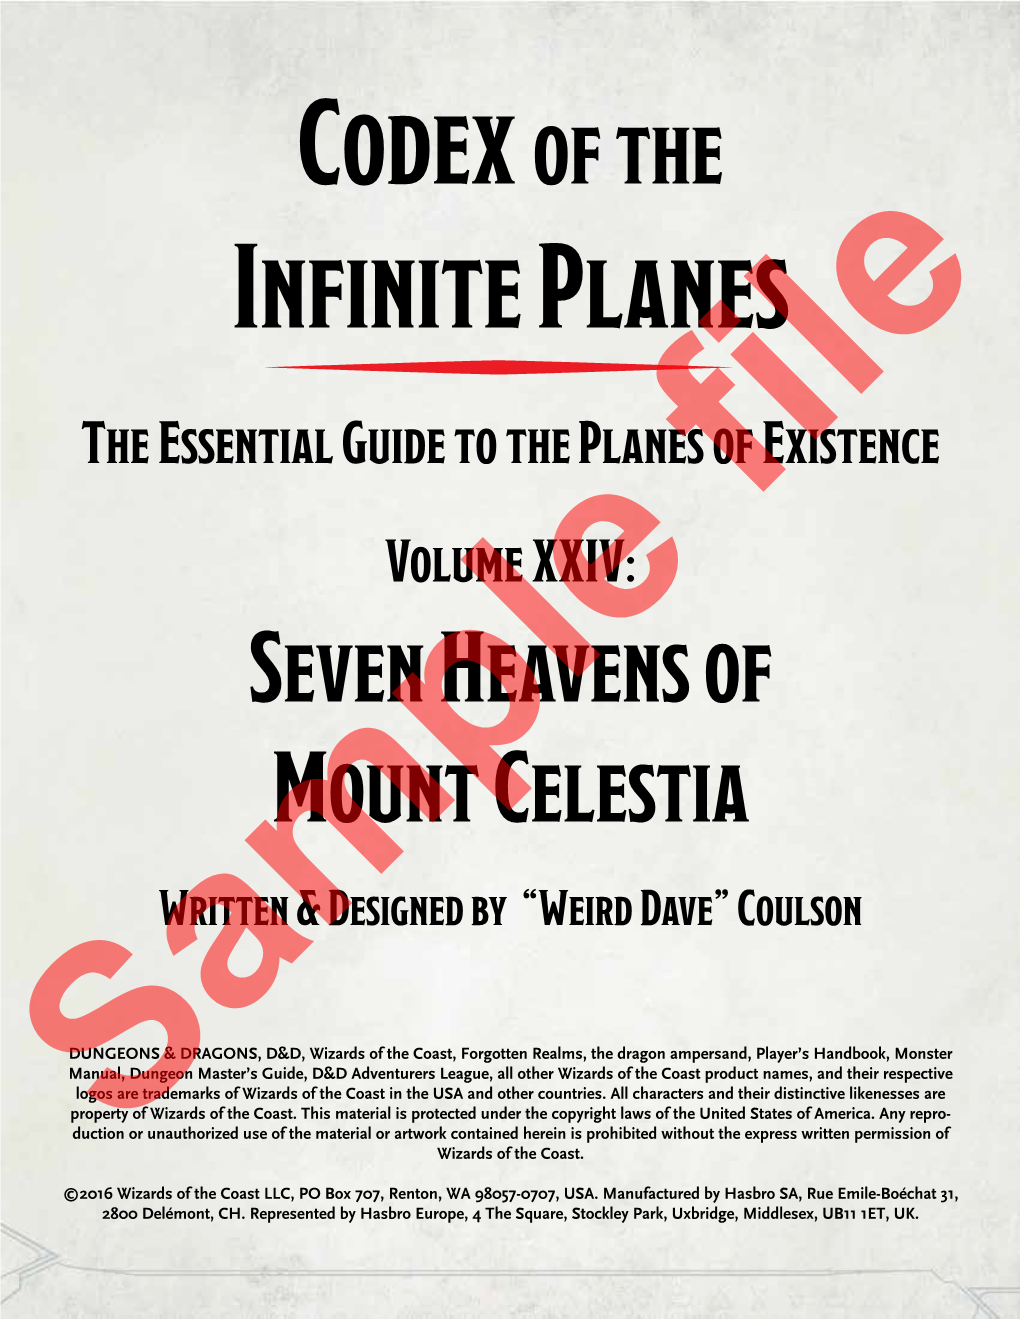 Seven Heavens of Mount Celestia Written & Designed by “Weird Dave” Coulson